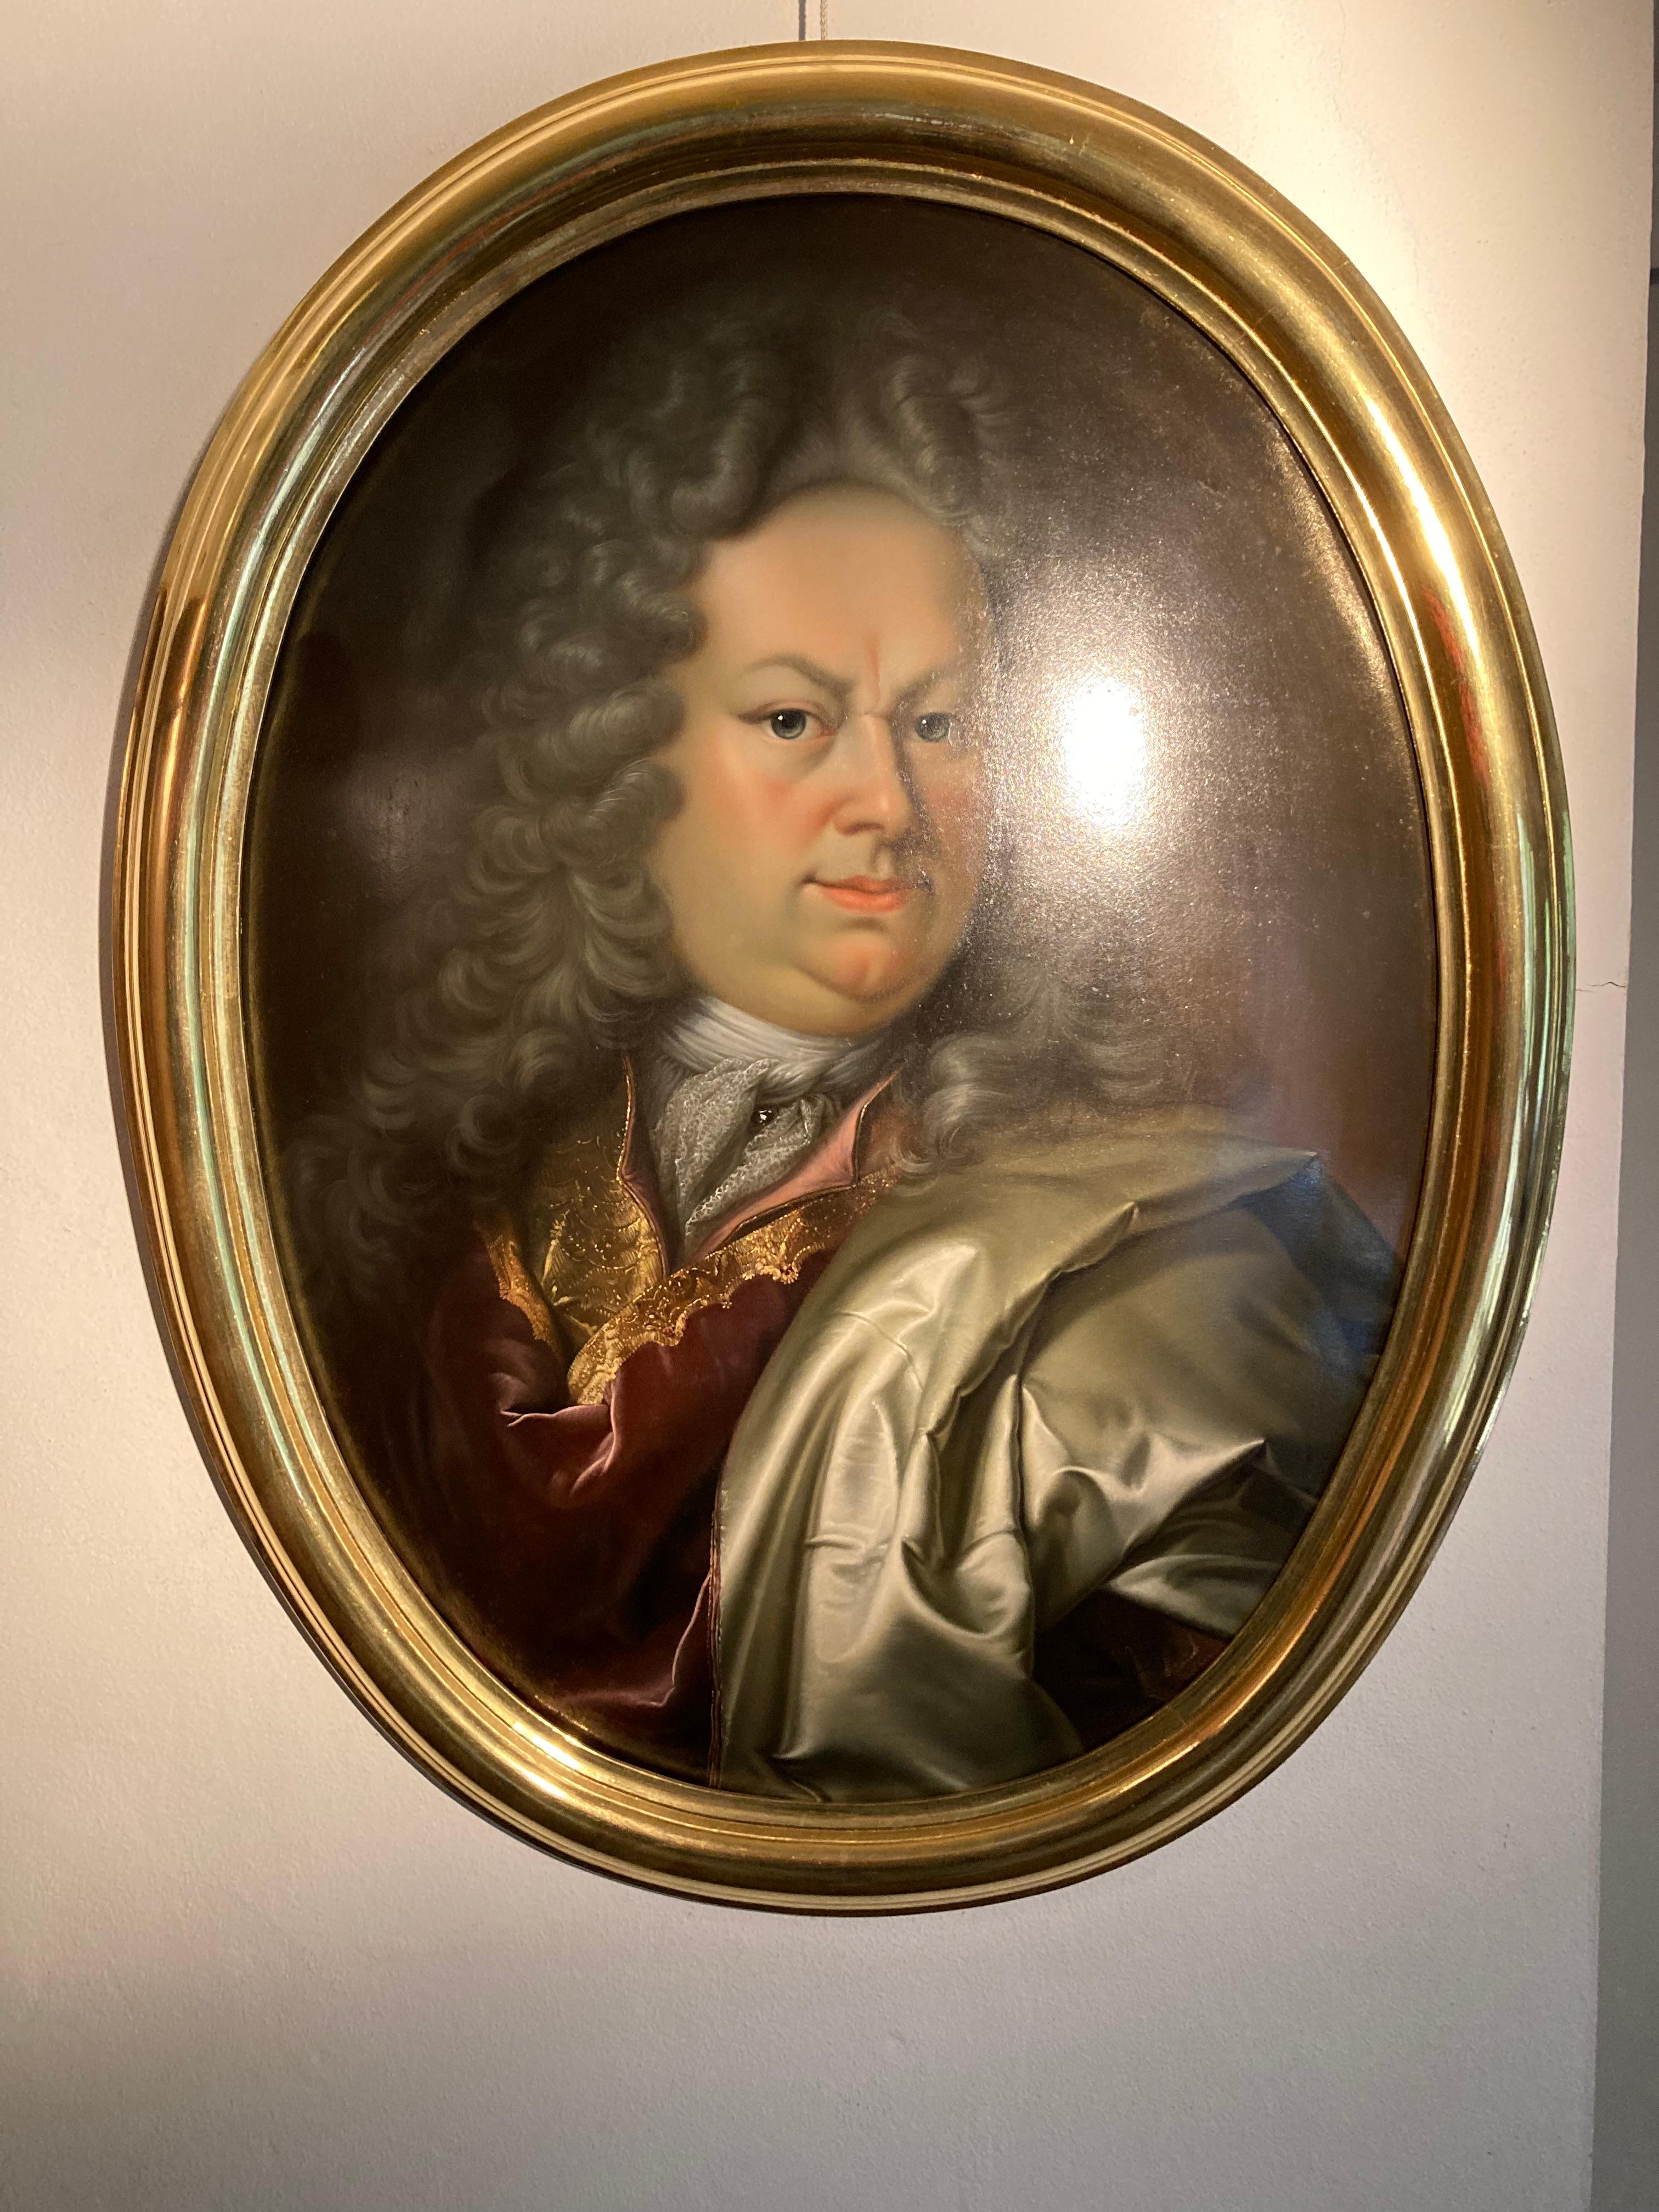 Portrait of a Gentleman, Halung, Court Painter Schildbach, Gotha, Convex Copper For Sale 2